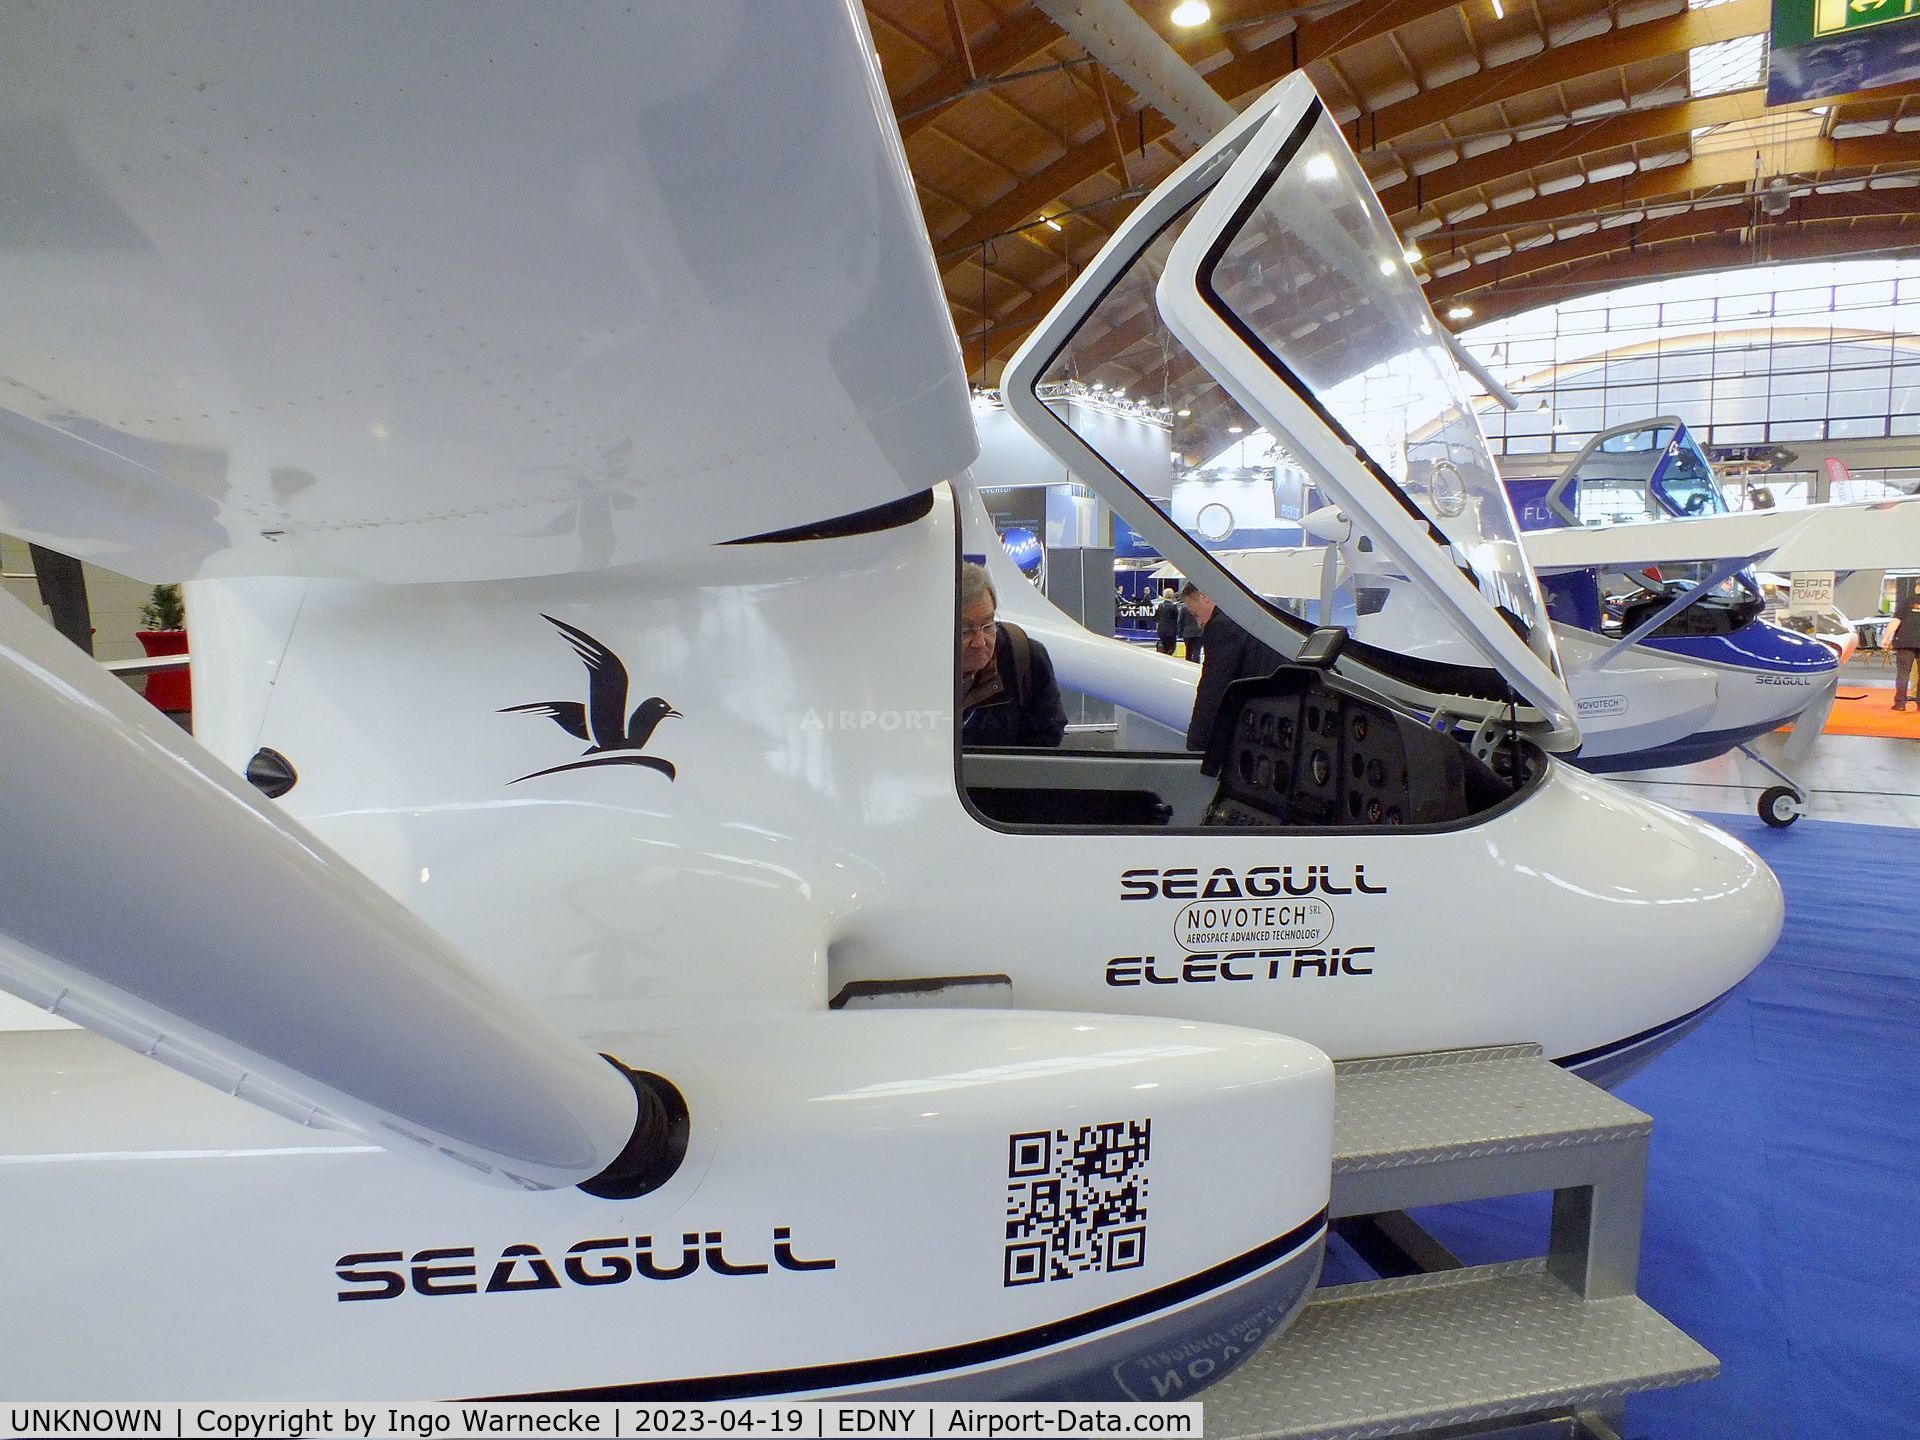 UNKNOWN, Novotech Seagull Hybrid C/N not found_unknown, Novotech Seagull Hybrid with Rotax 912 S + EMRAX electric motor at the AERO 2023, Friedrichshafen